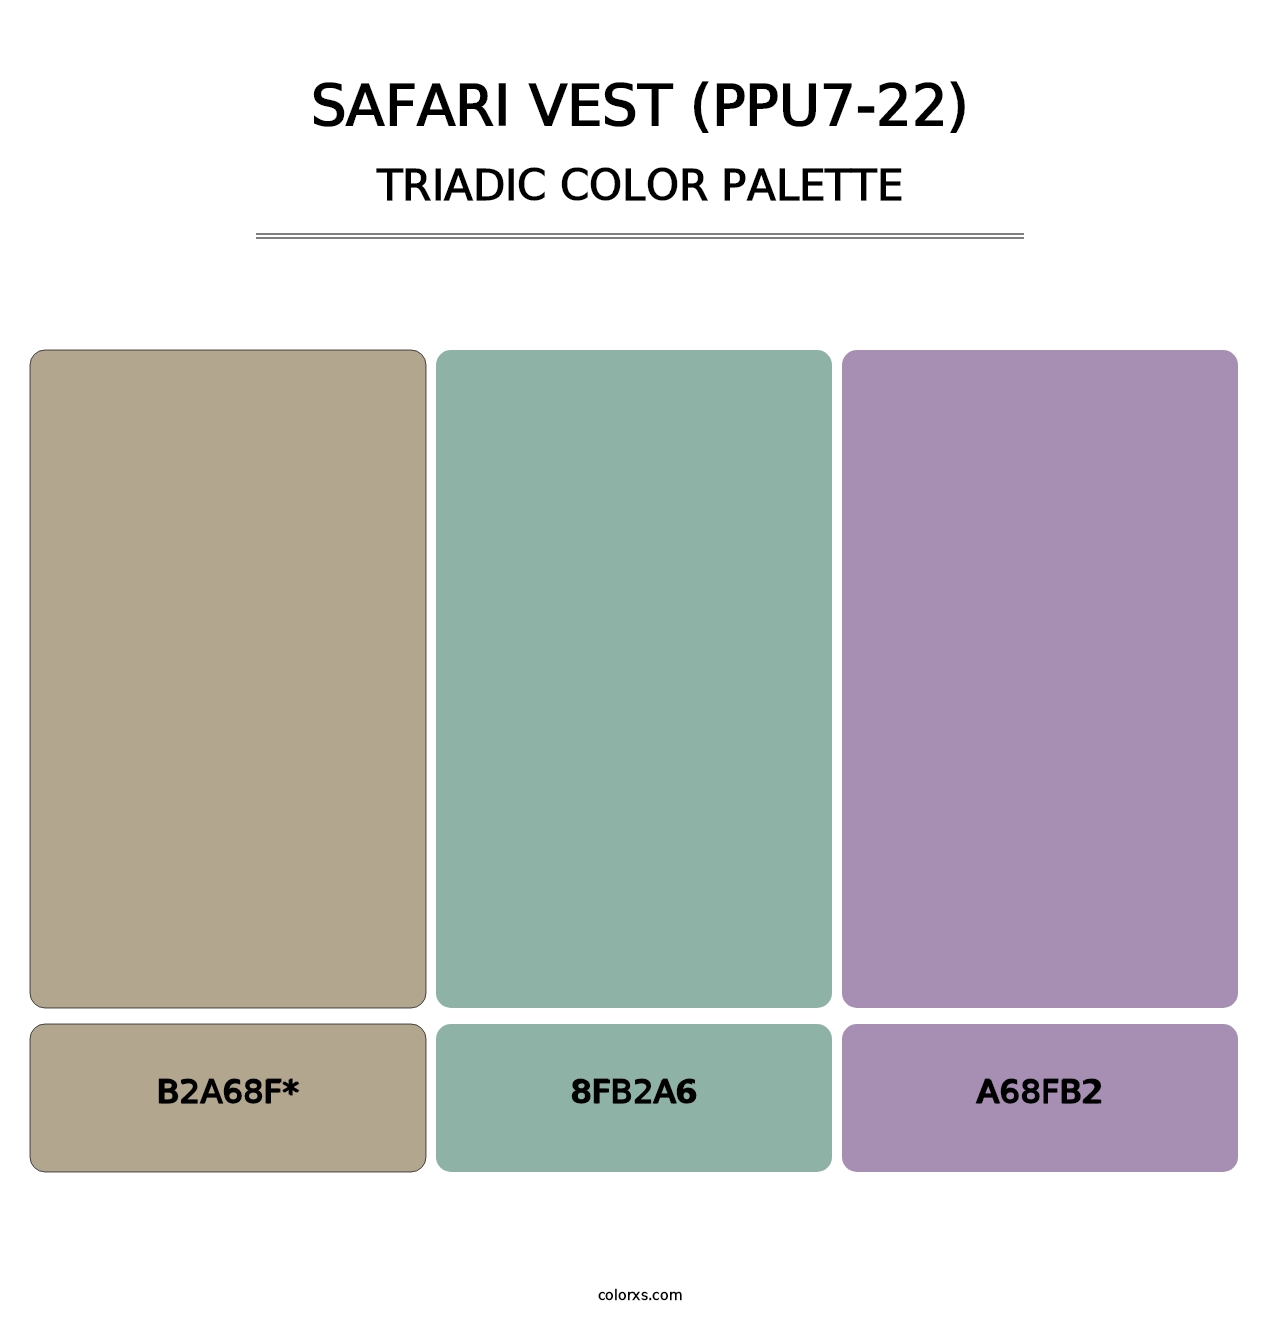 Safari Vest (PPU7-22) - Triadic Color Palette